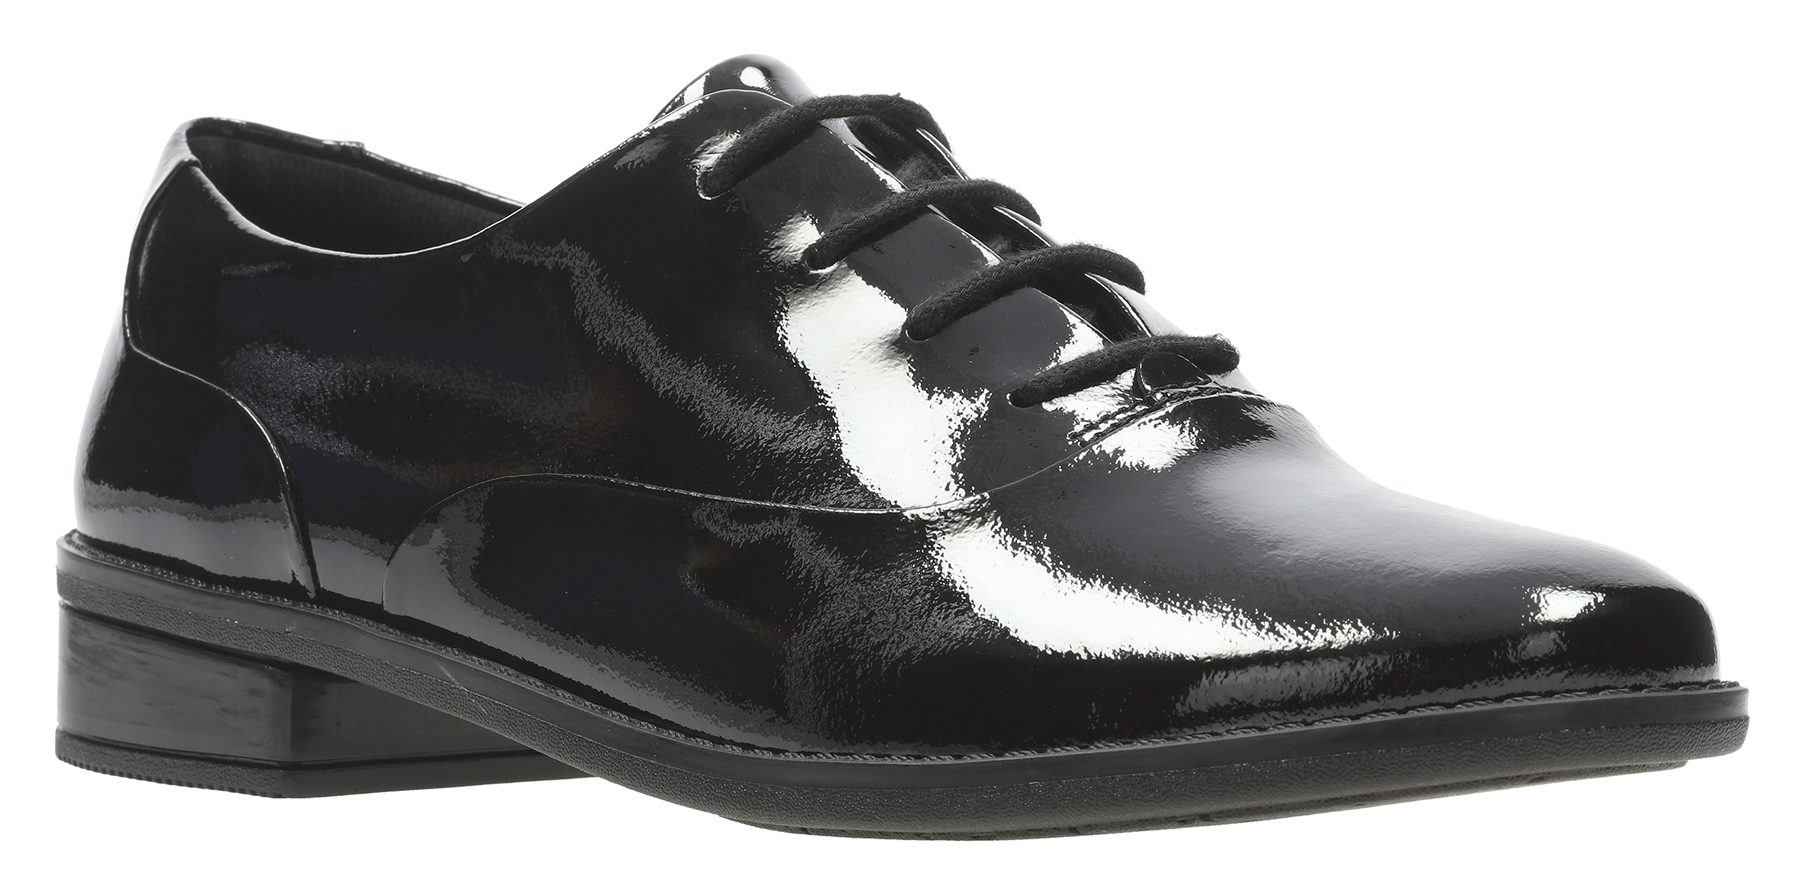 Clarks Drew Star Black Patent Leather 26134920 - Girls School Shoes ...